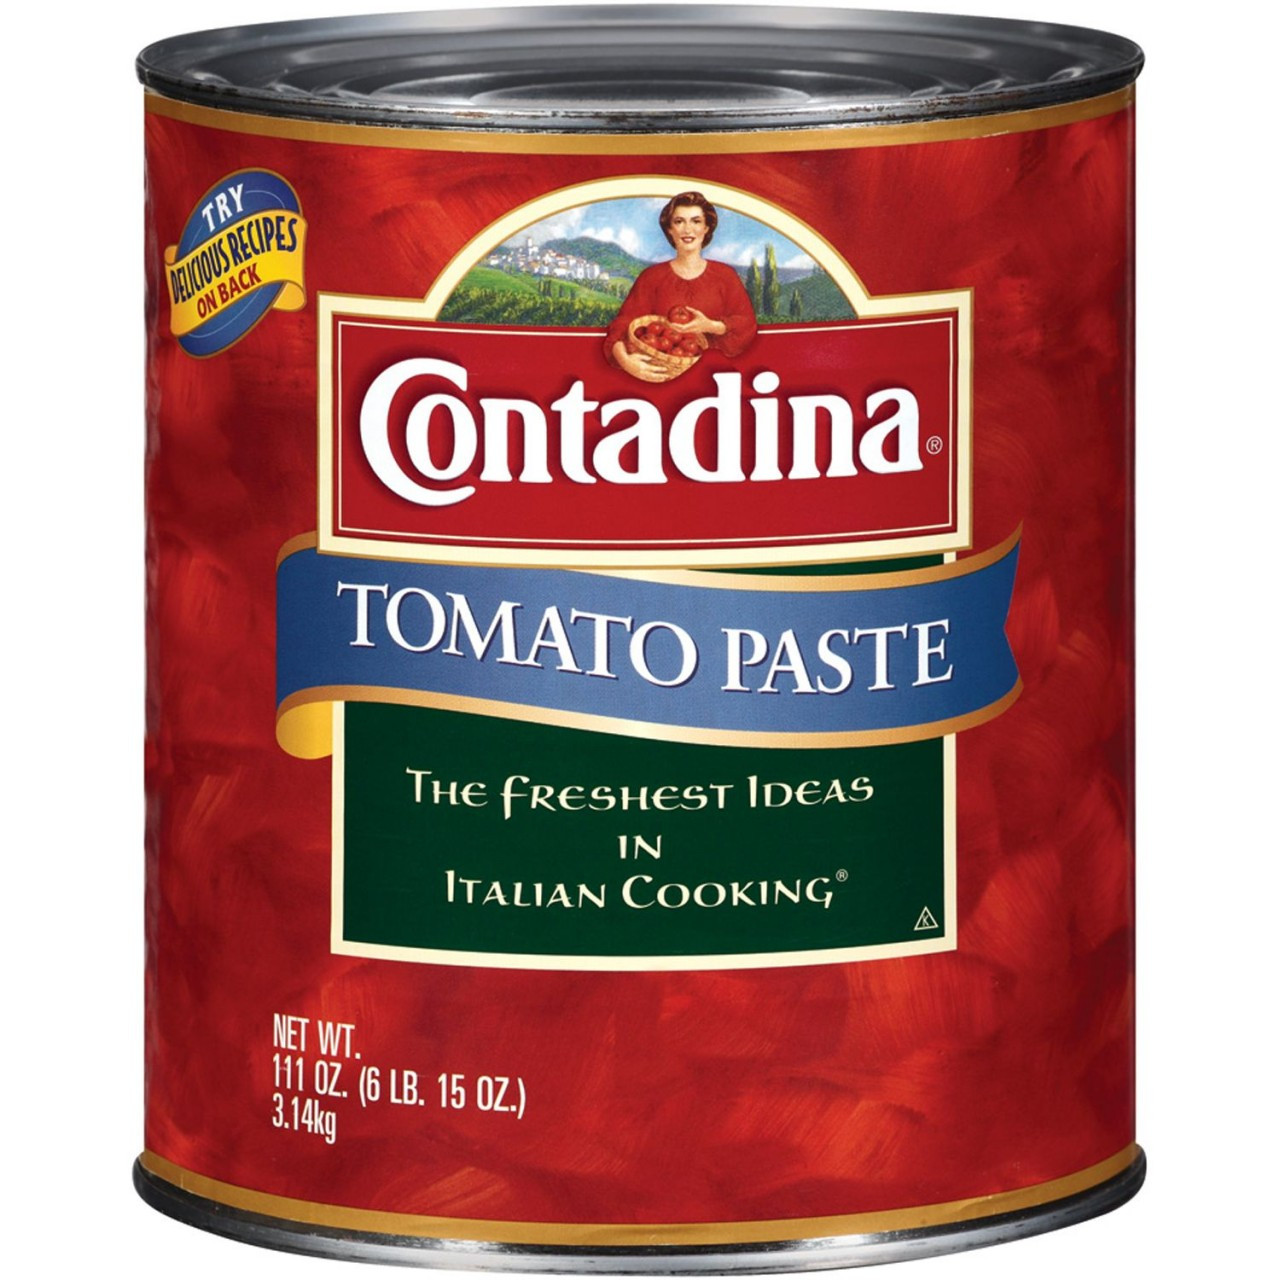 Contadina Tomato Sauce
 Contadina Tomato Paste 10 can Demmerche